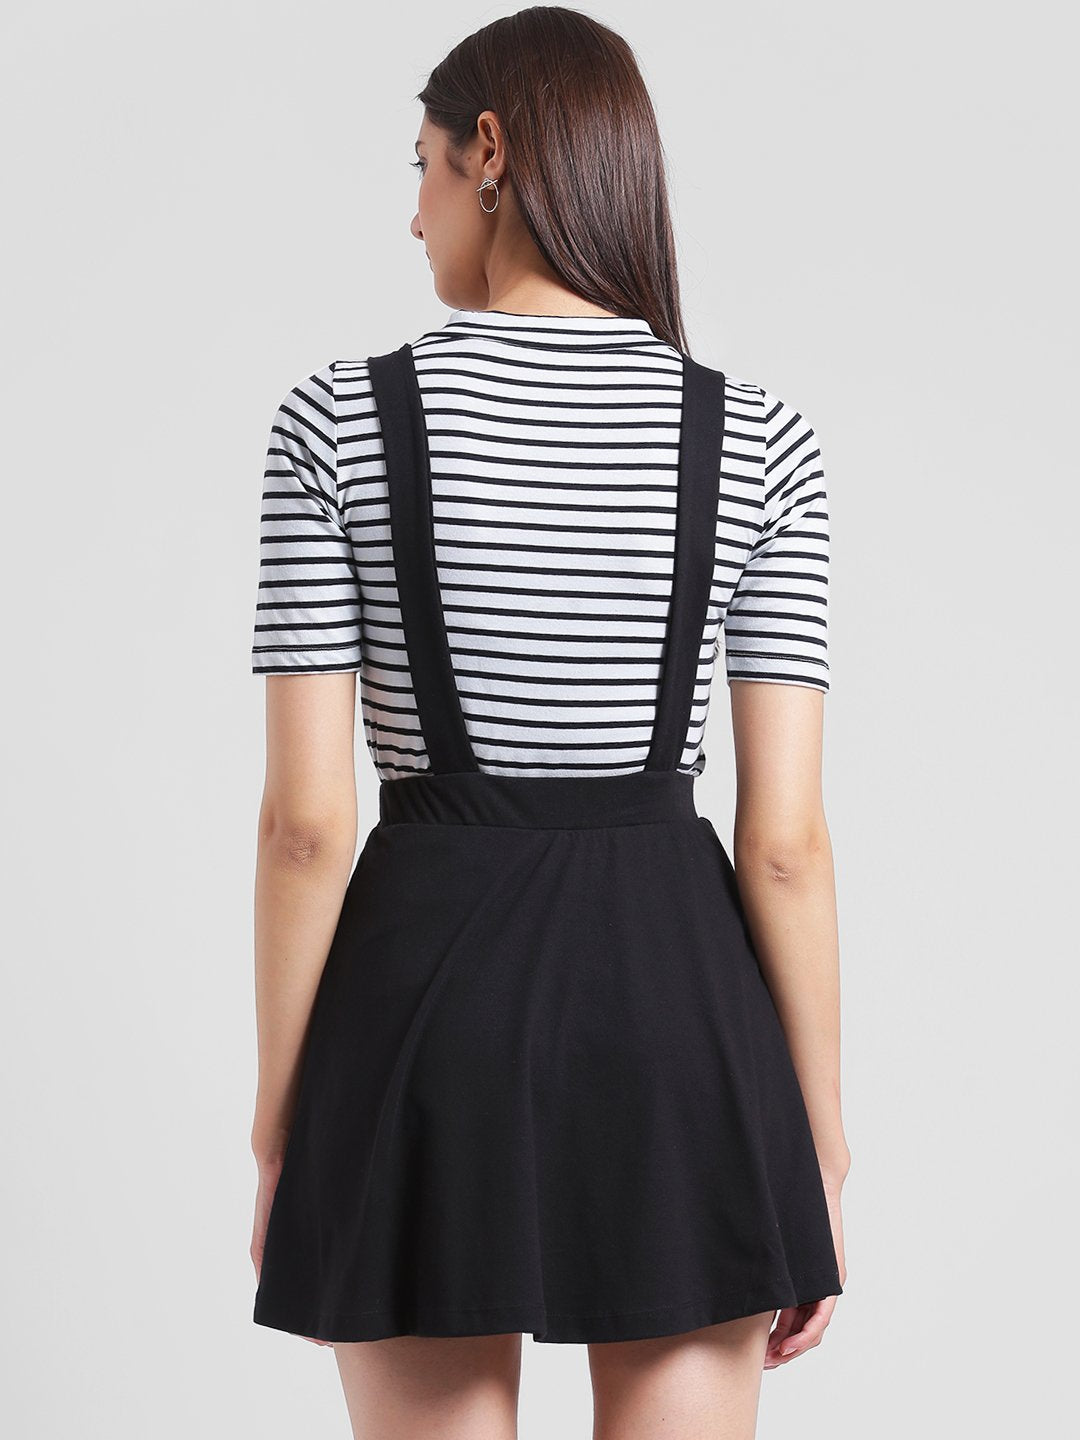 Buy Suspender Skirt by KHELA KIDS at Ogaan Online Shopping Site